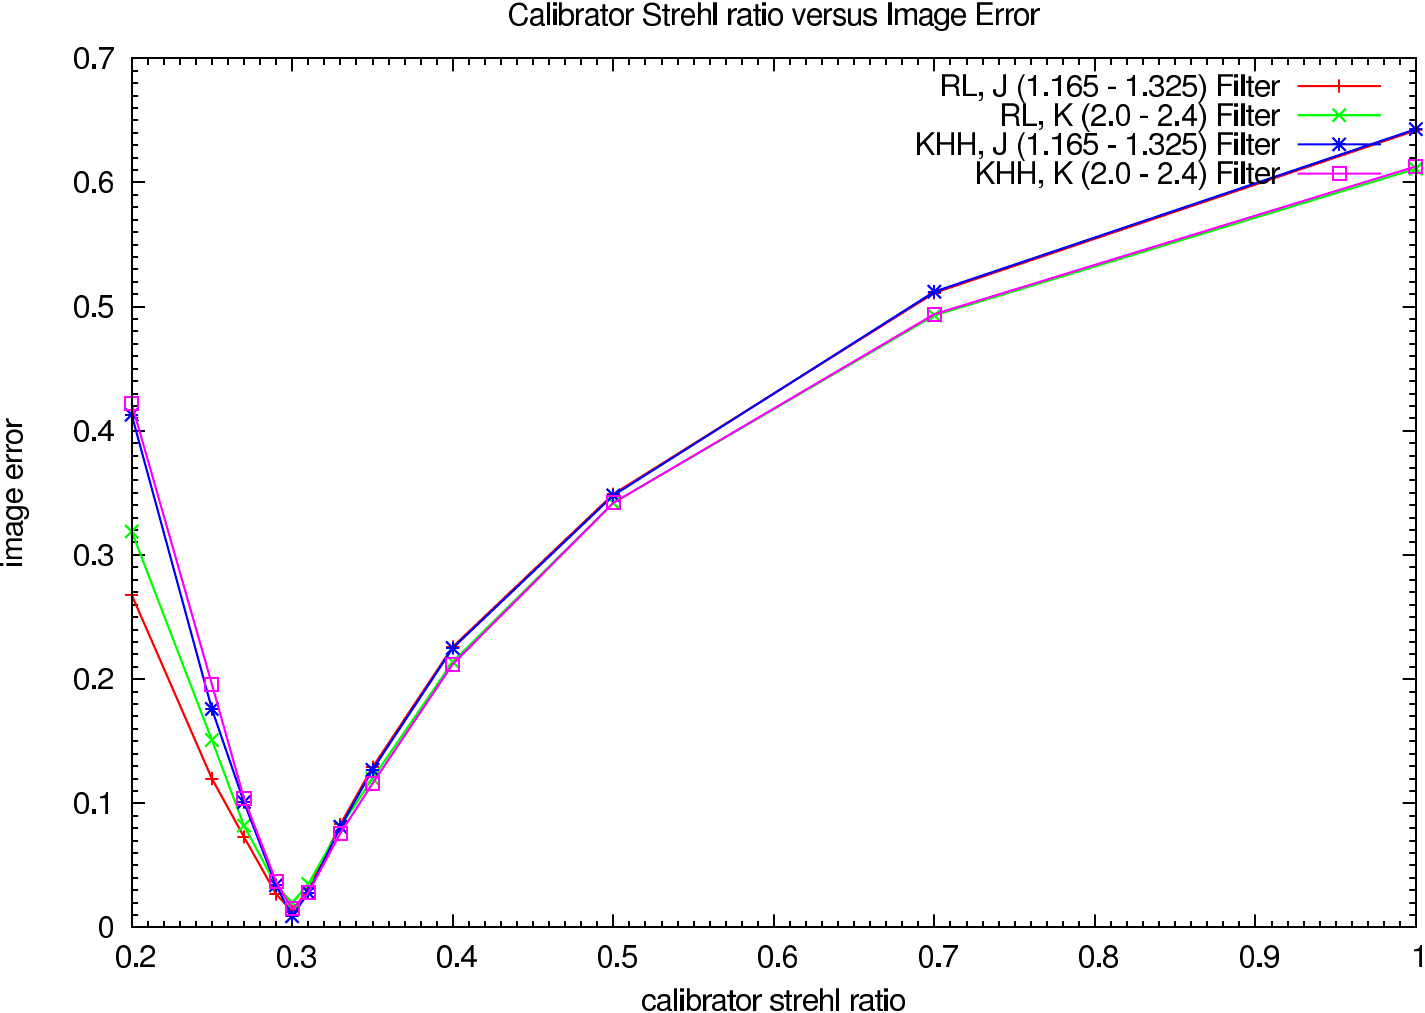 Image errors depending on the calibrator strehl ratio